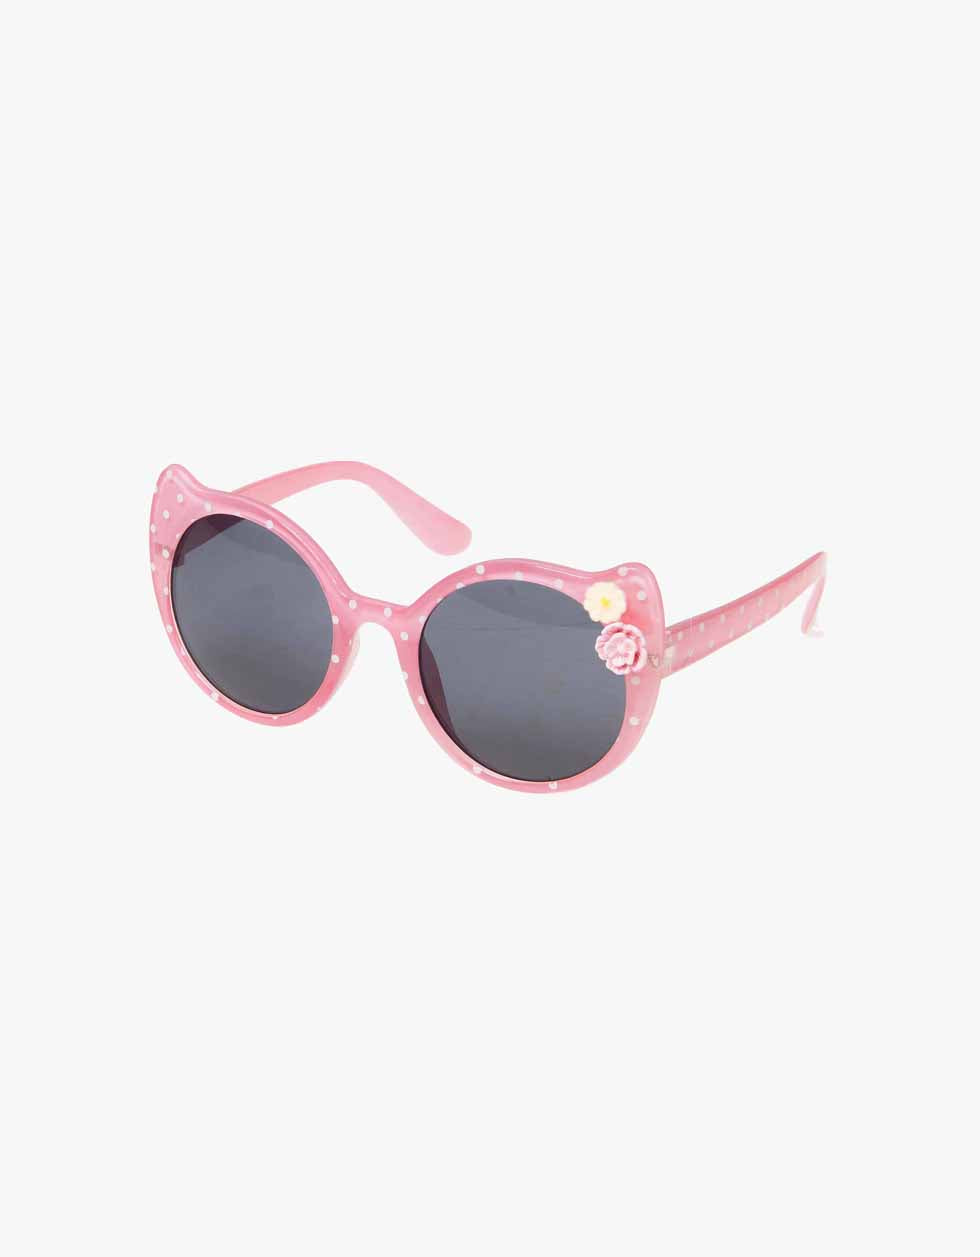 Frida Cat Sunglasses - Pink